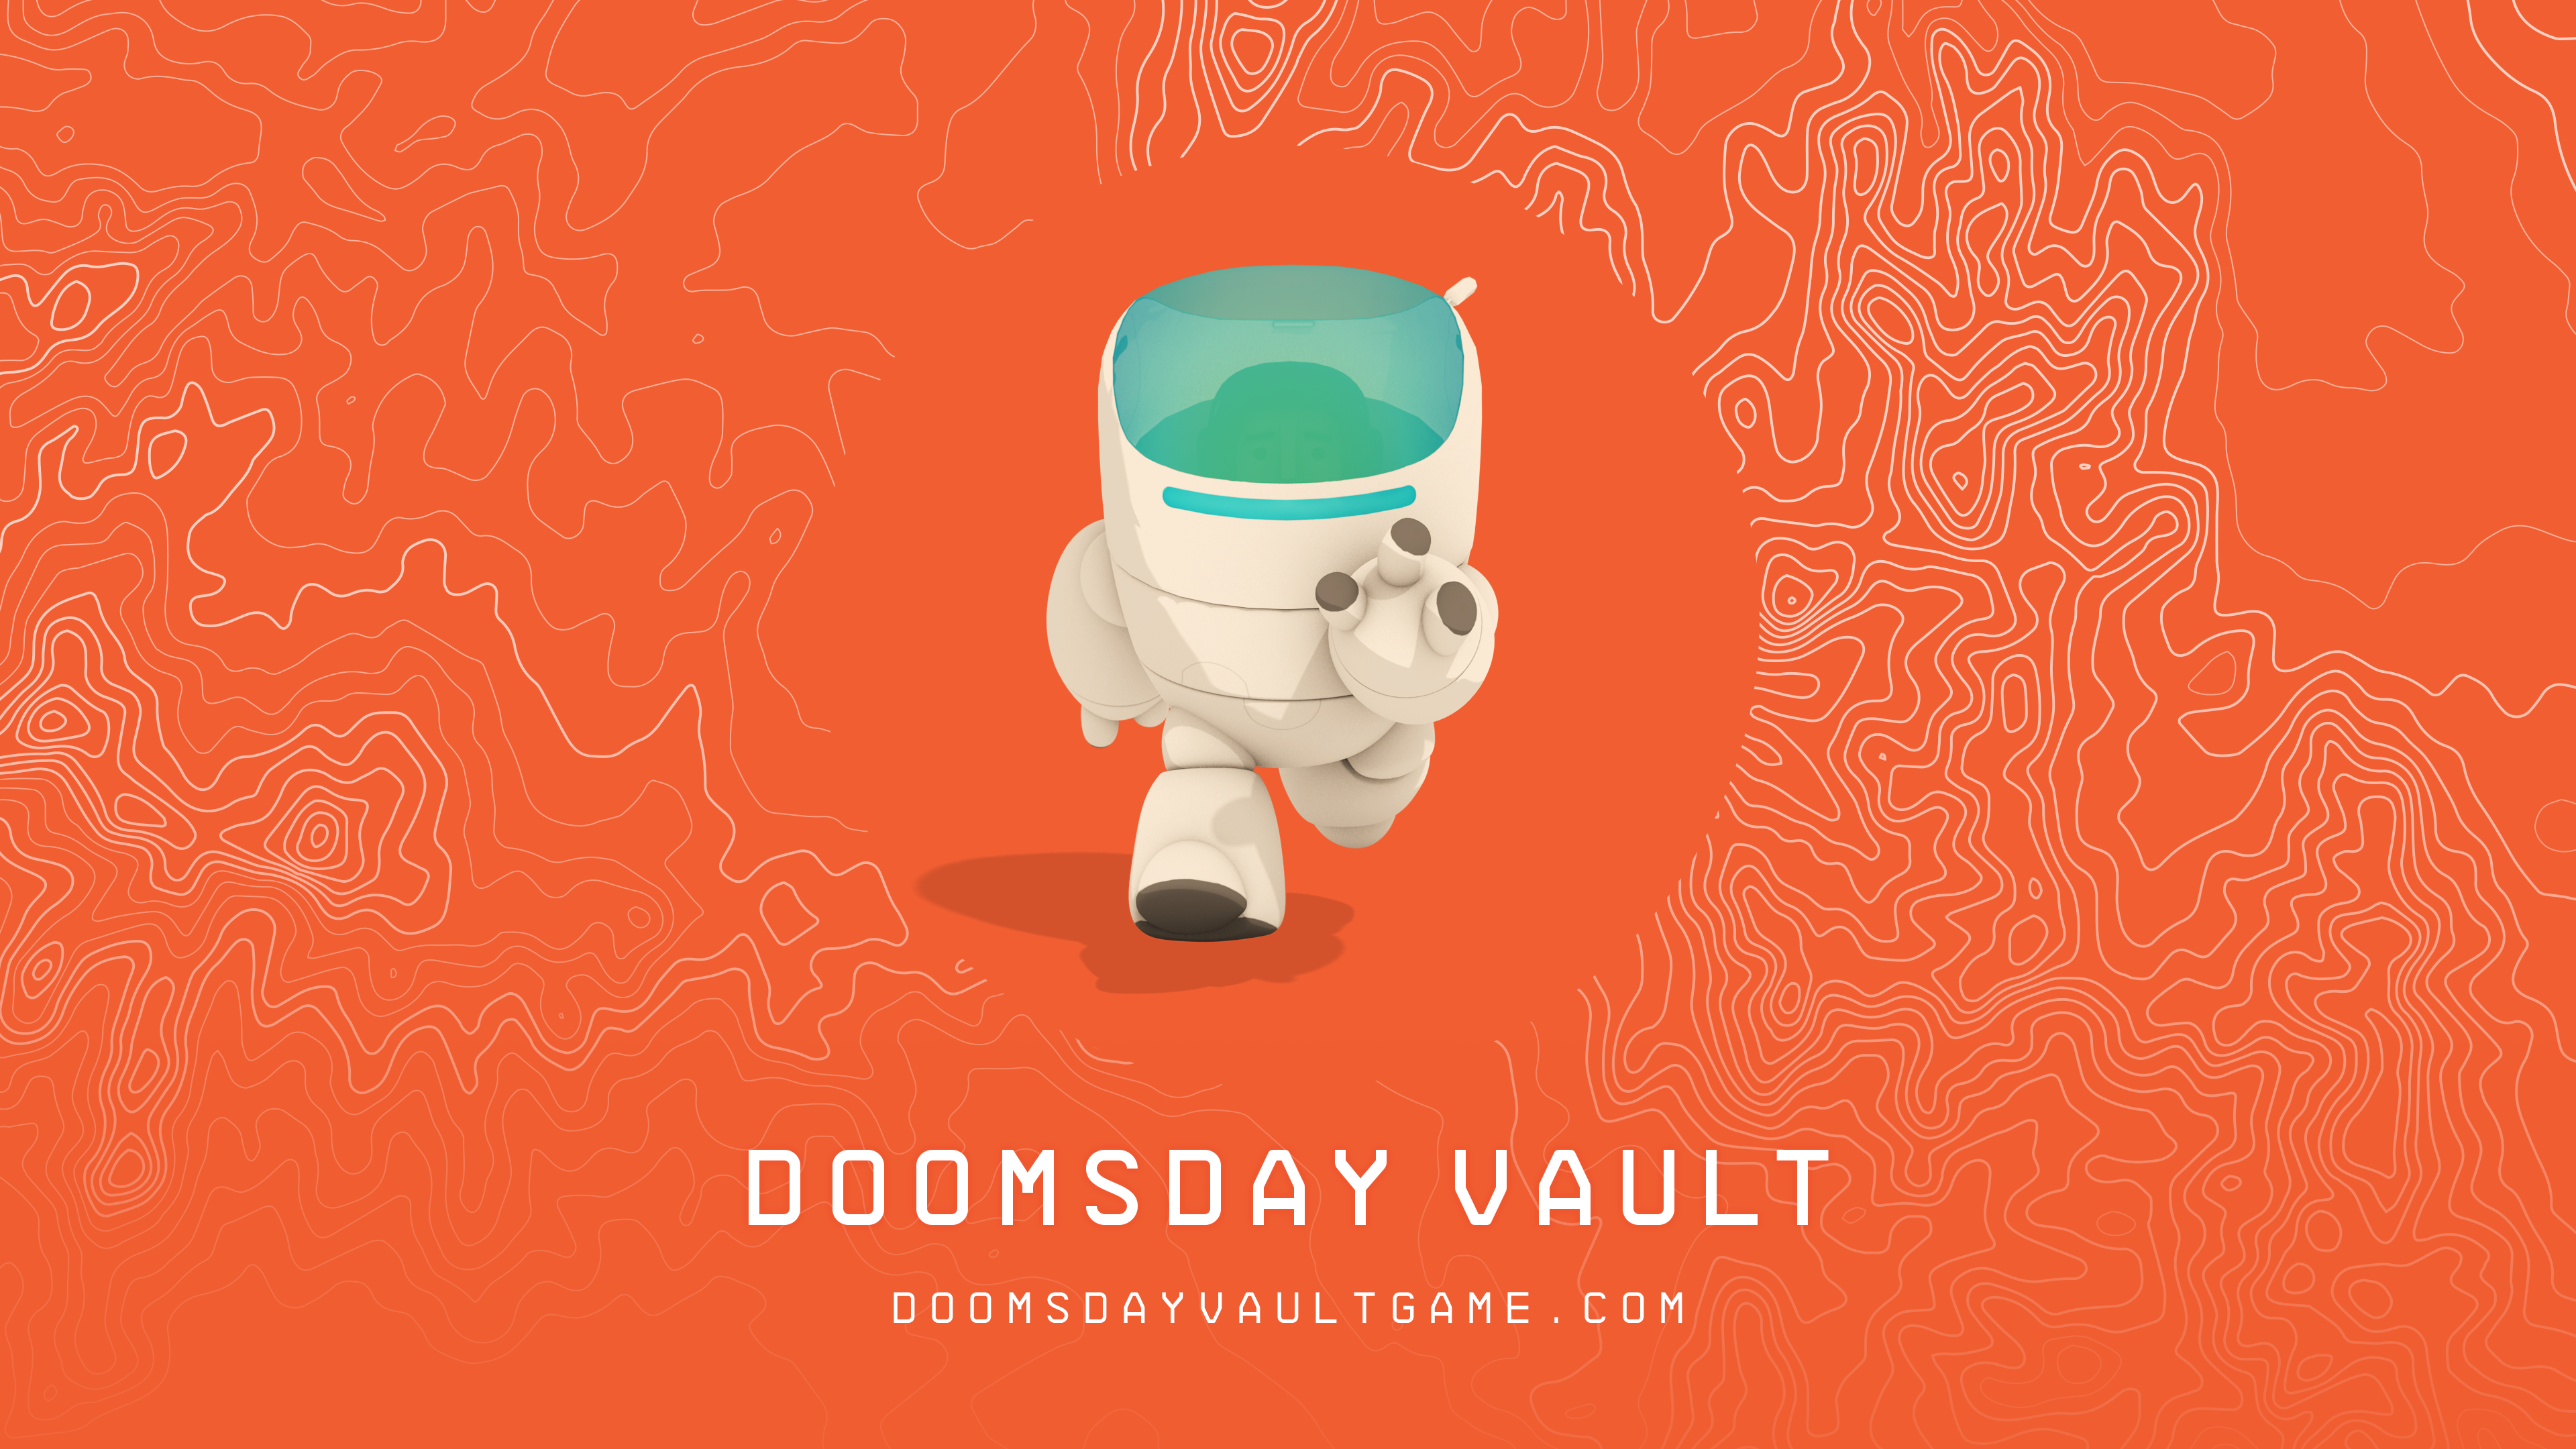 Doomsday_Vault_identity_pose_03.png